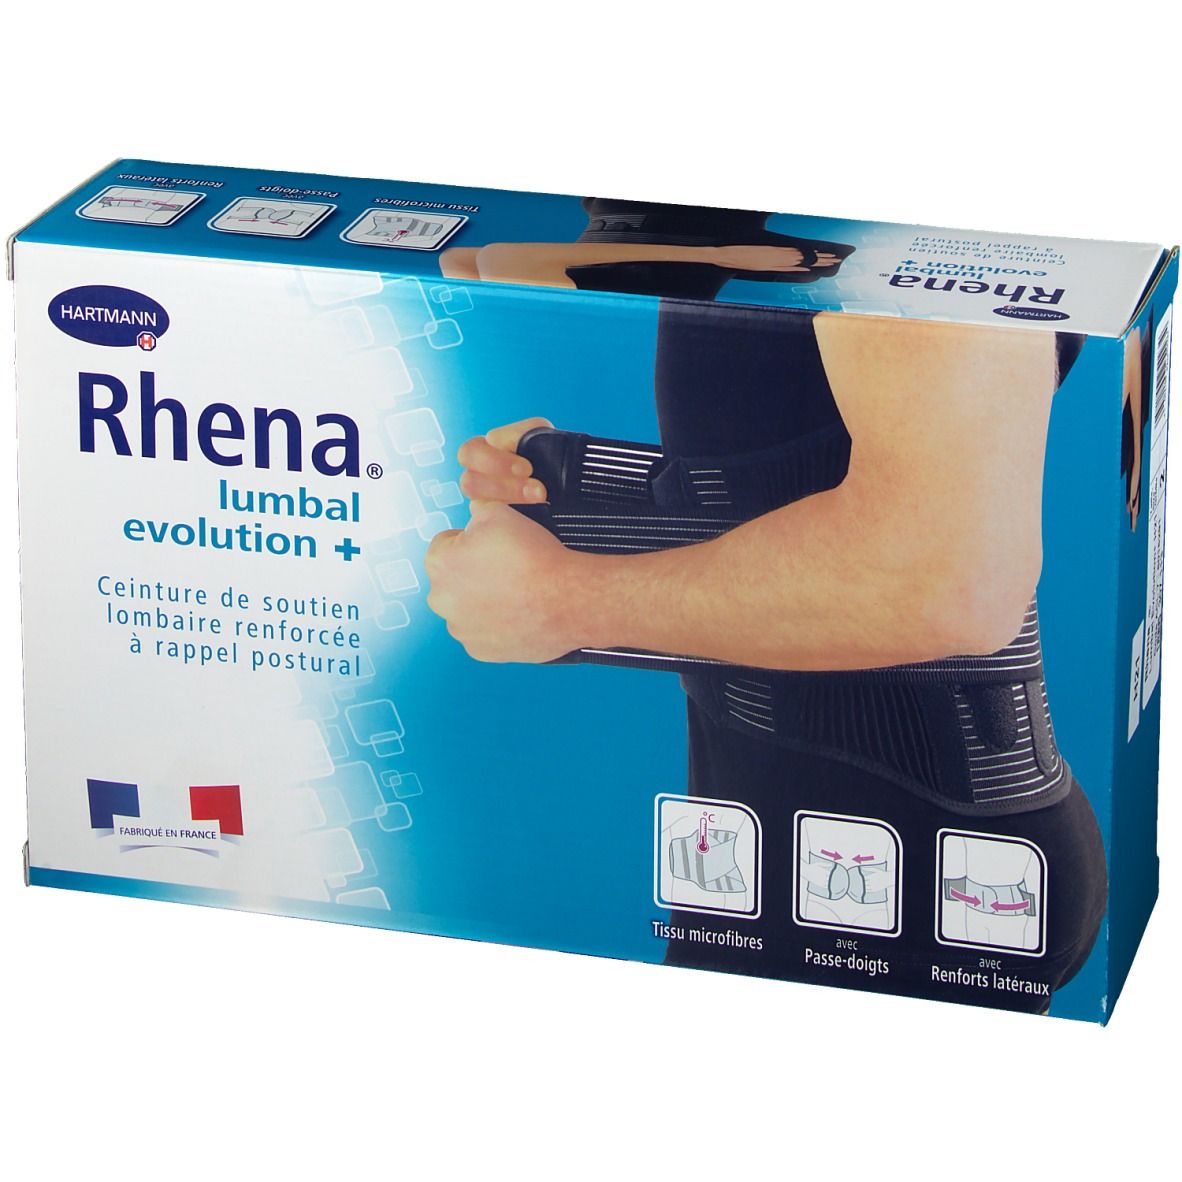 Rhena® lumbal evolution+ Taille 2 H21